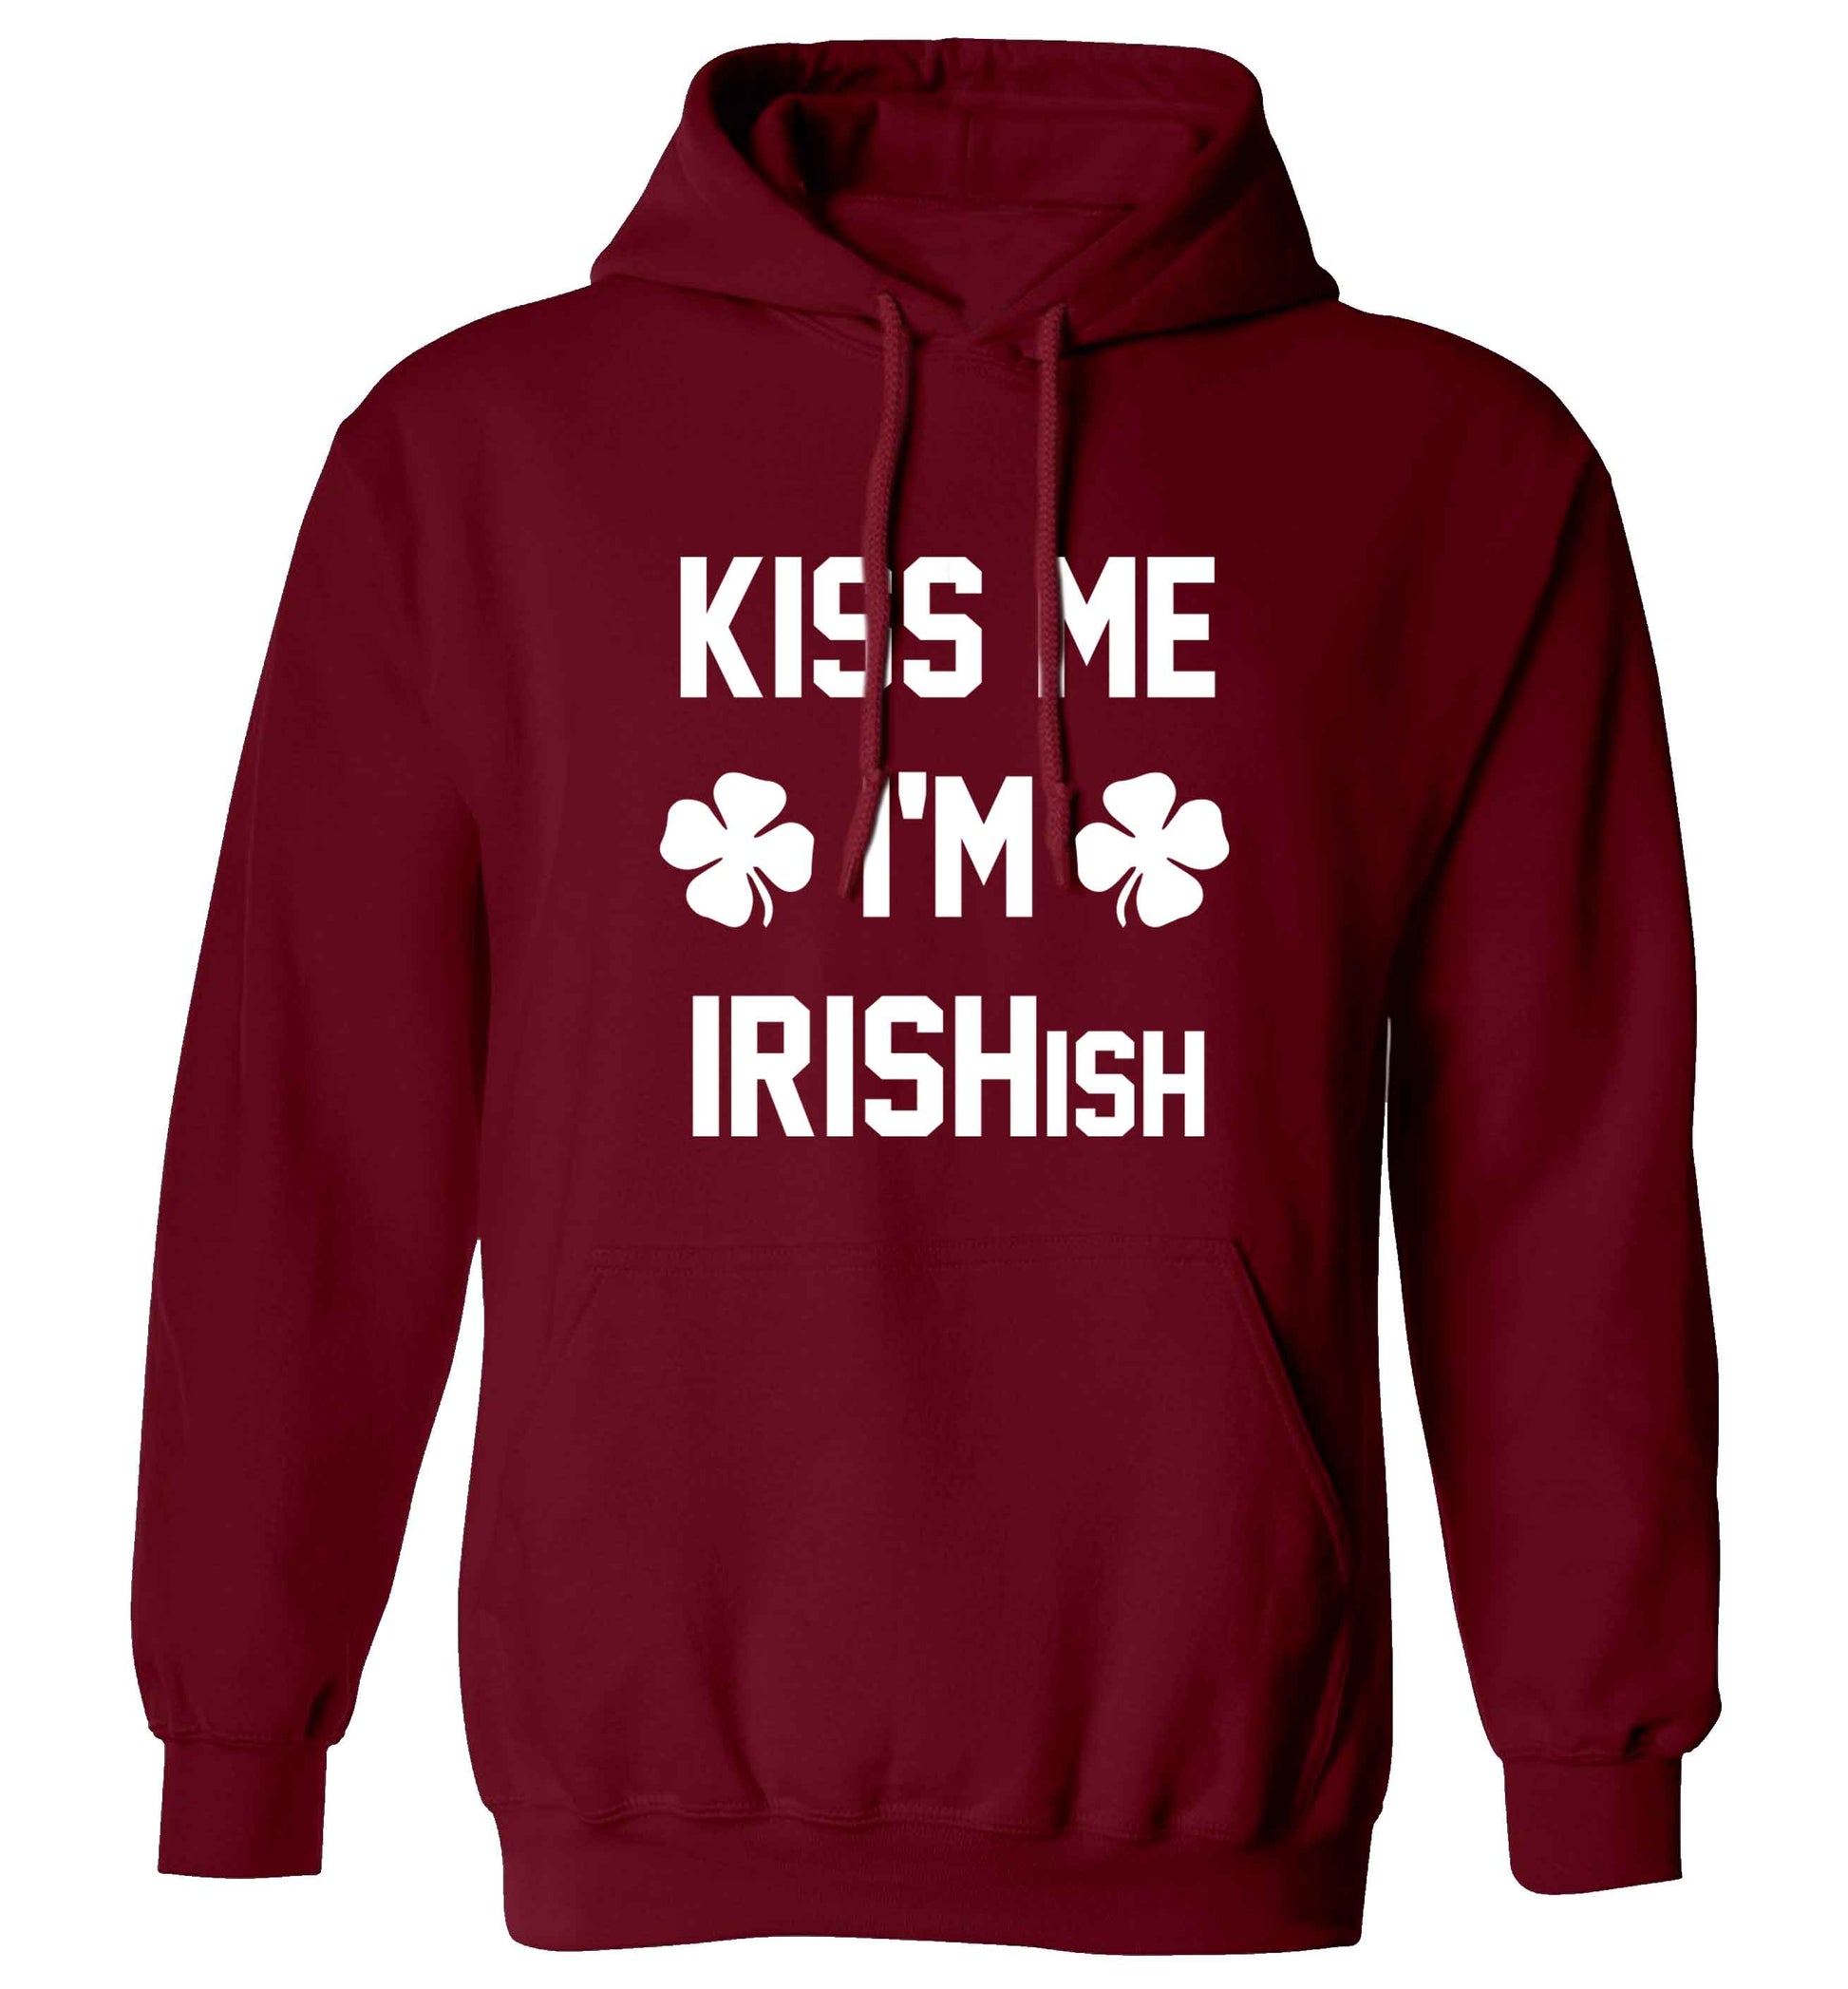 Kiss me I'm Irishish adults unisex maroon hoodie 2XL